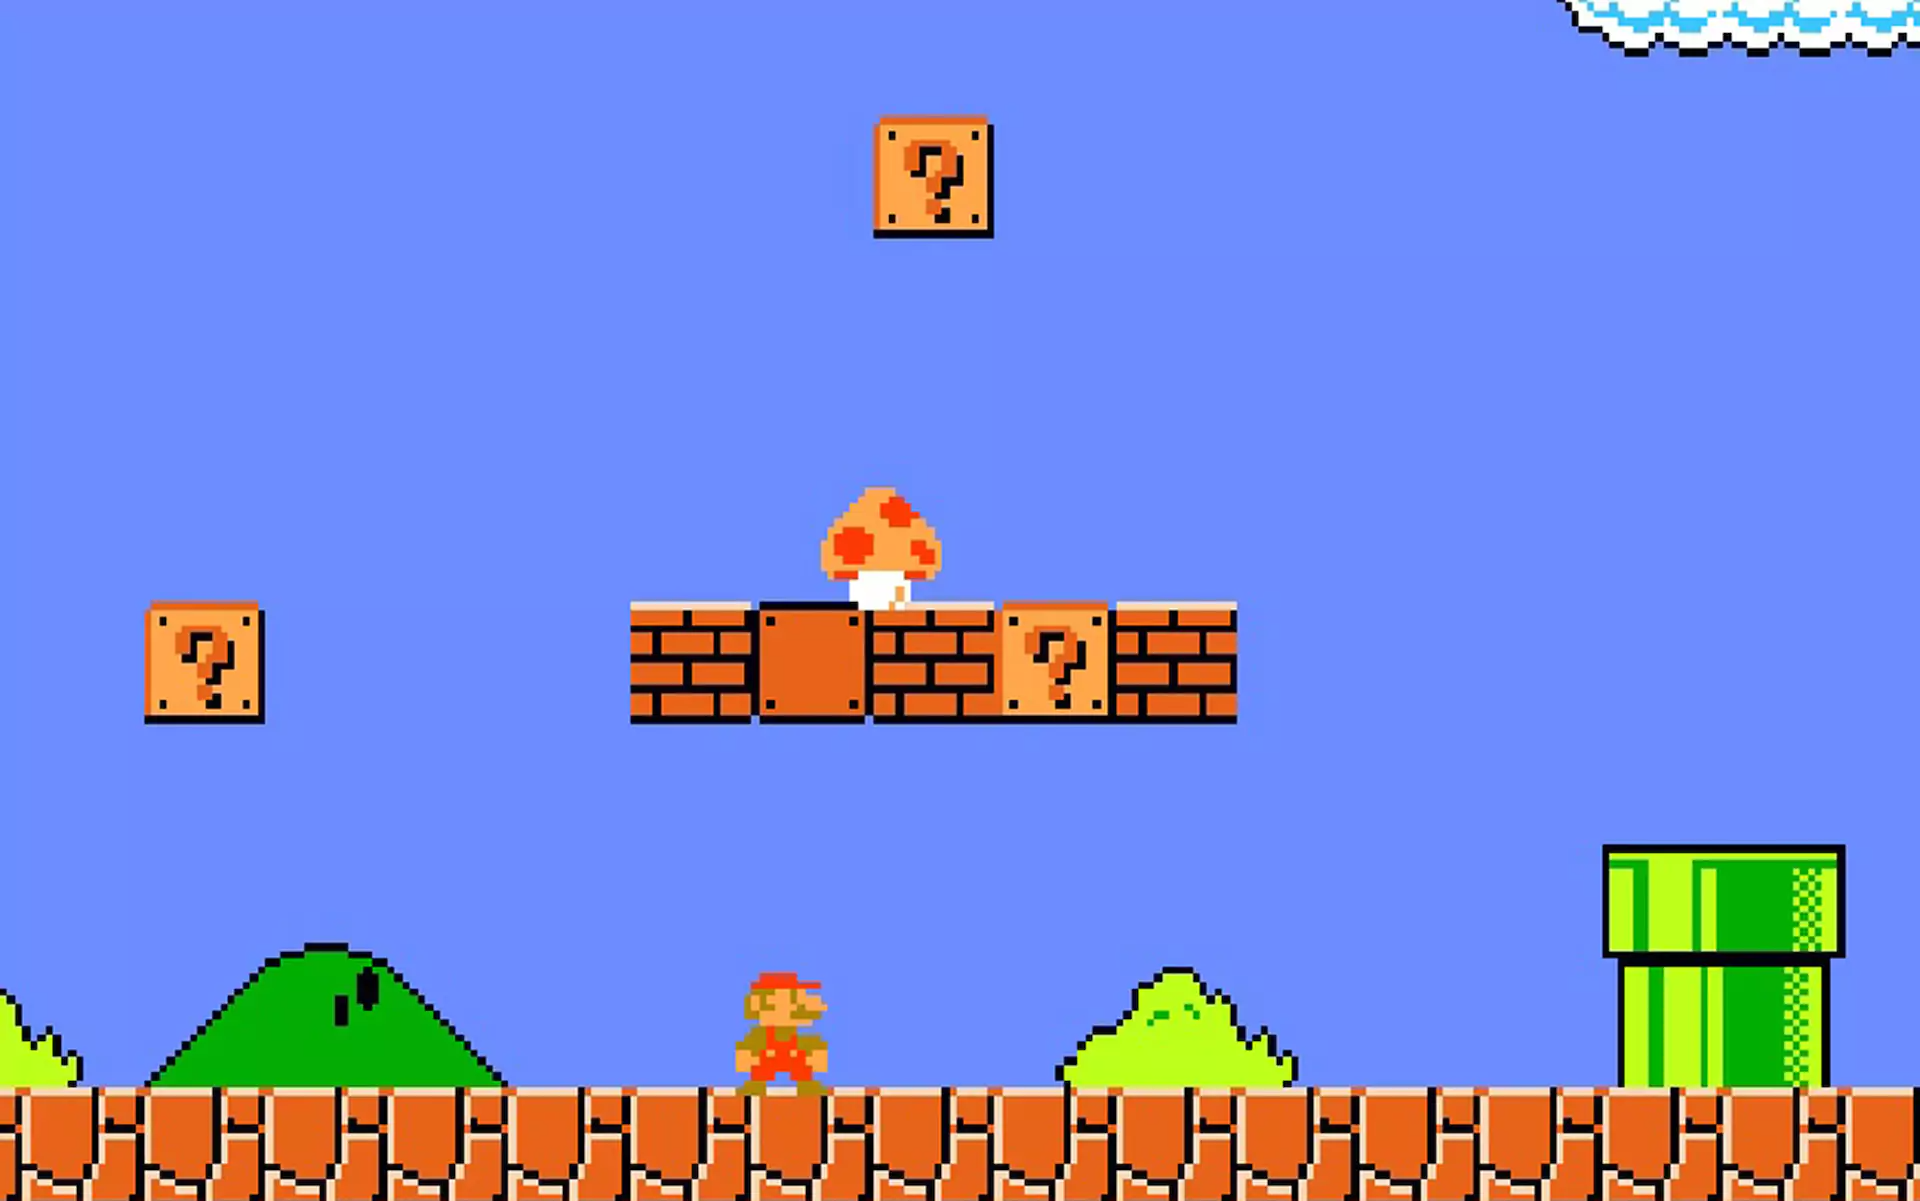 Mario gameplay. Супер Марио БРОС Денди. Супер Марио игра 1985. Супер Марио БРОС 1985 игра. Super Mario Bros 1985 геймплей.